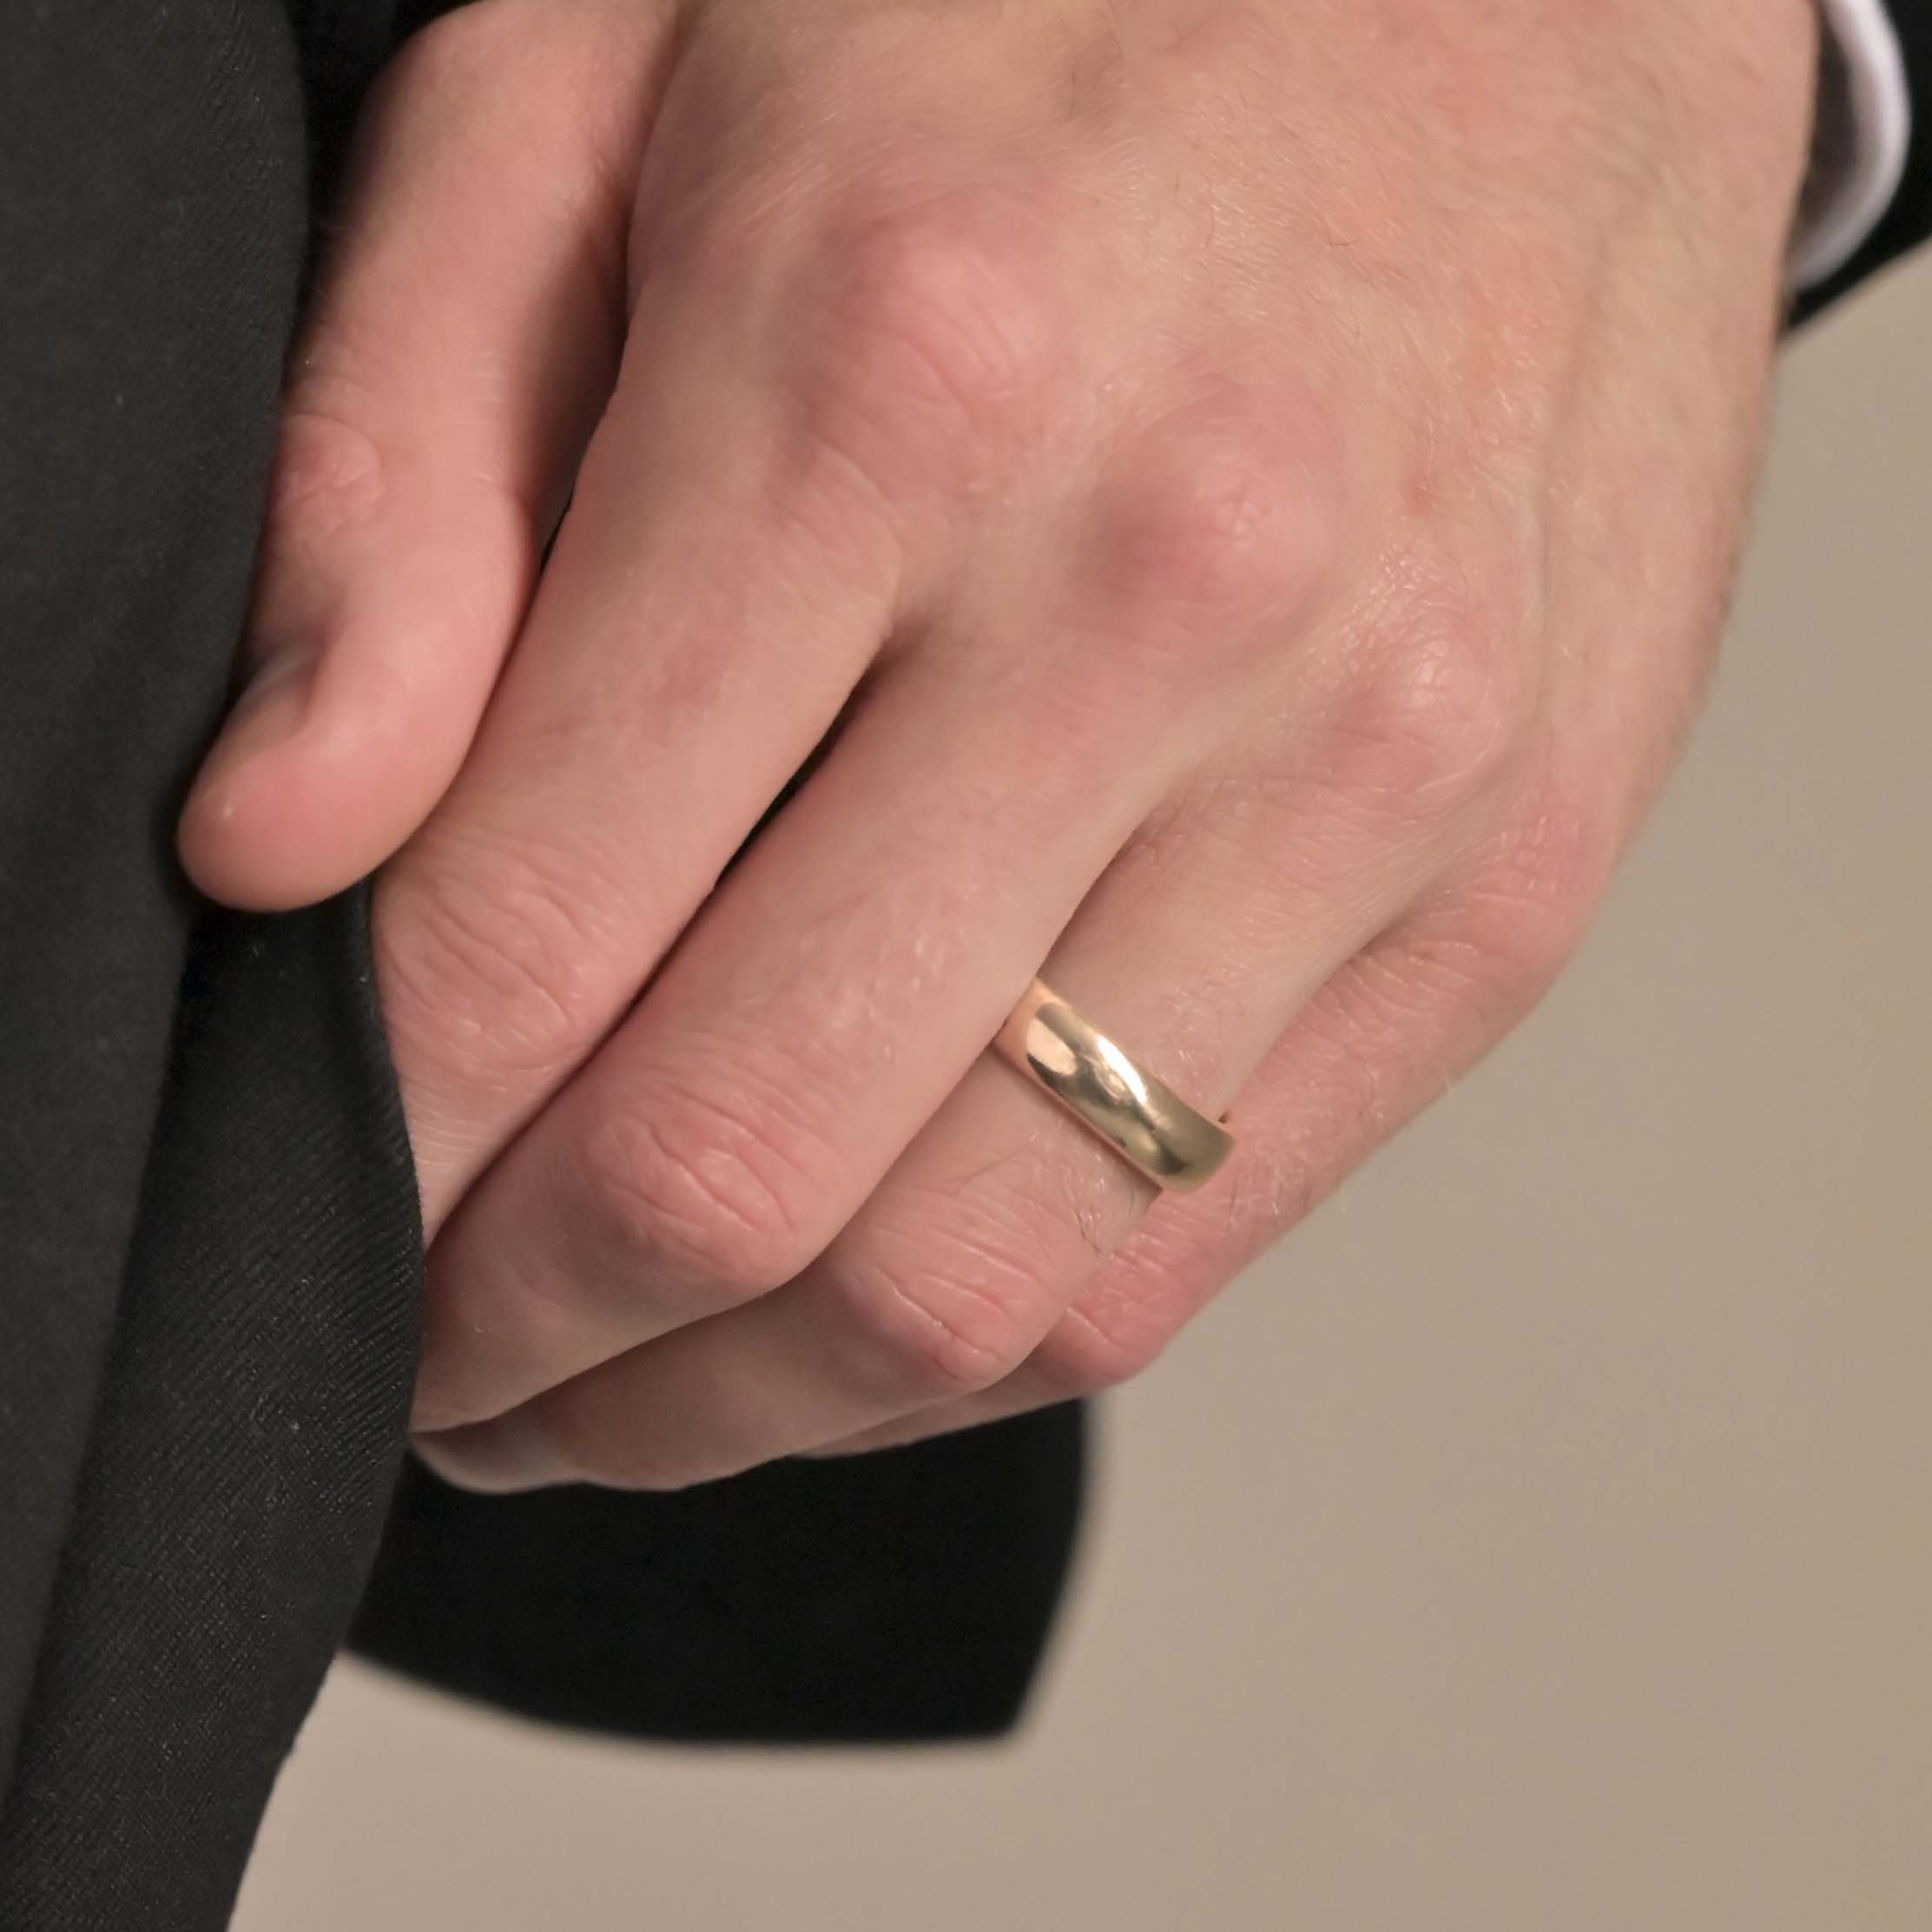 9ct Yellow Gold Chunky Wedding Ring